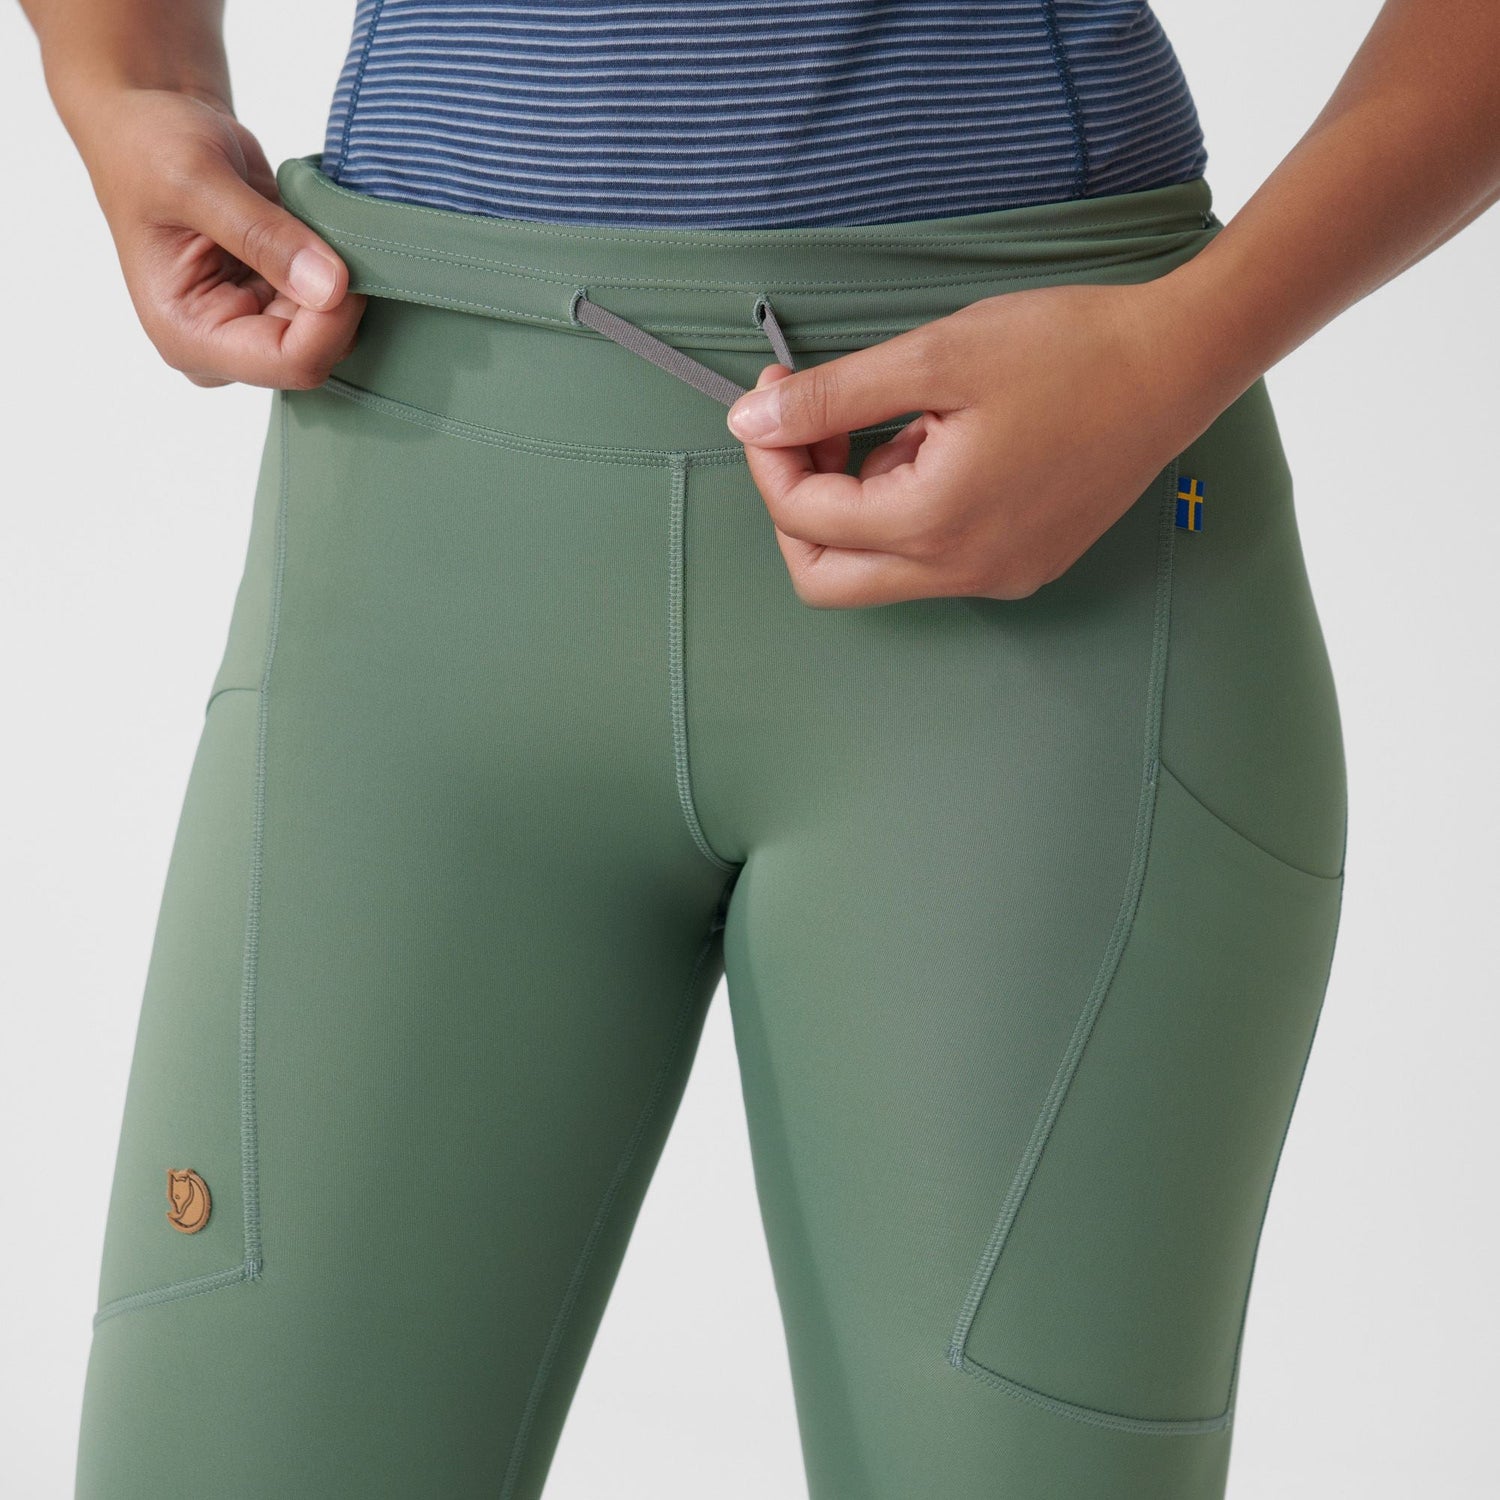 Fjällräven W's Abisko Tights - Recycled Polyester Patina Green Pants